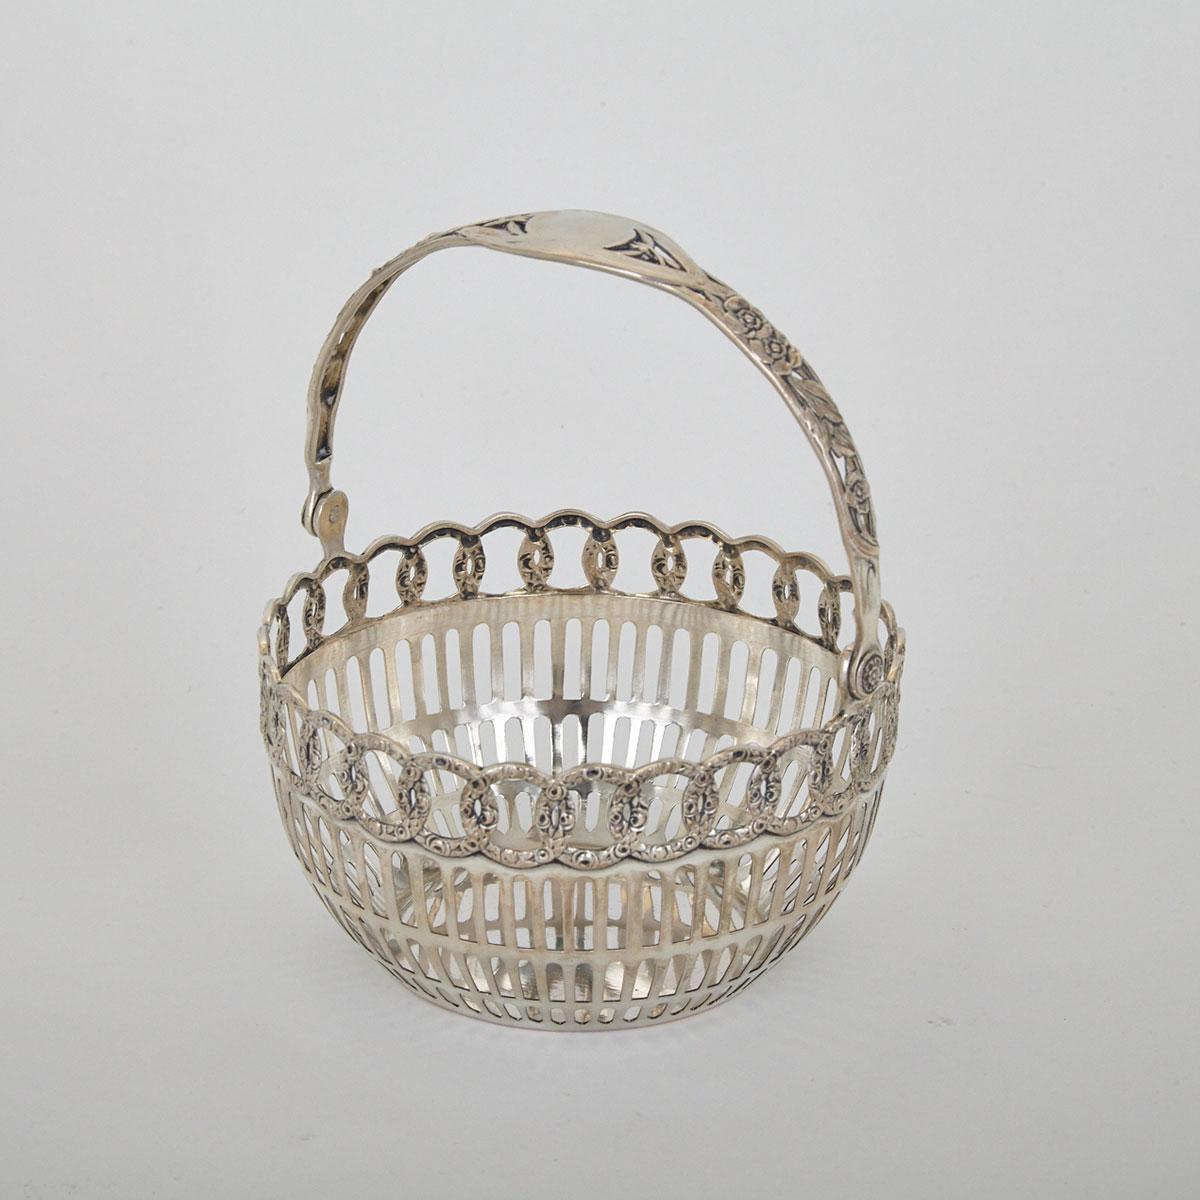 German Silver Pierced Basket, Gebruder Friedländer, early 20th Century